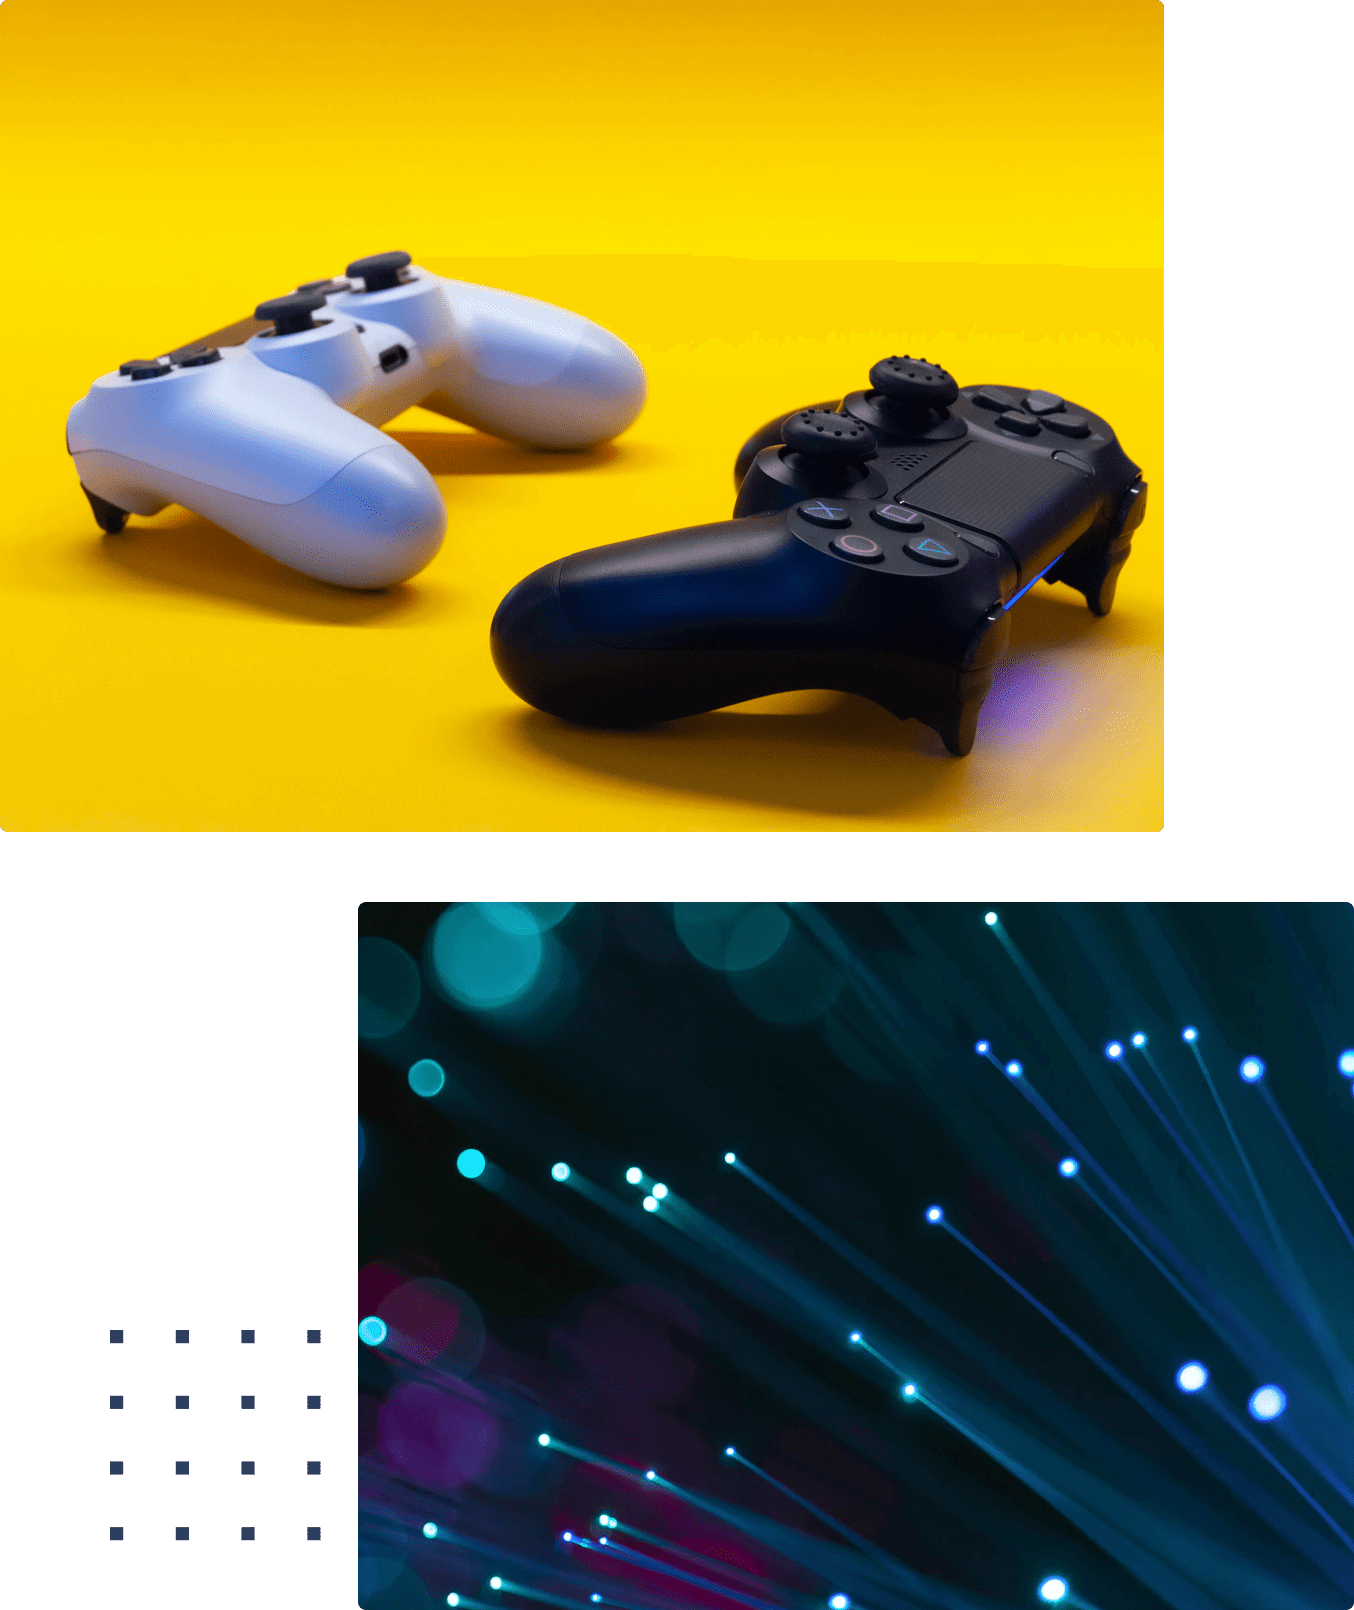 Video game controllers and fiber optics